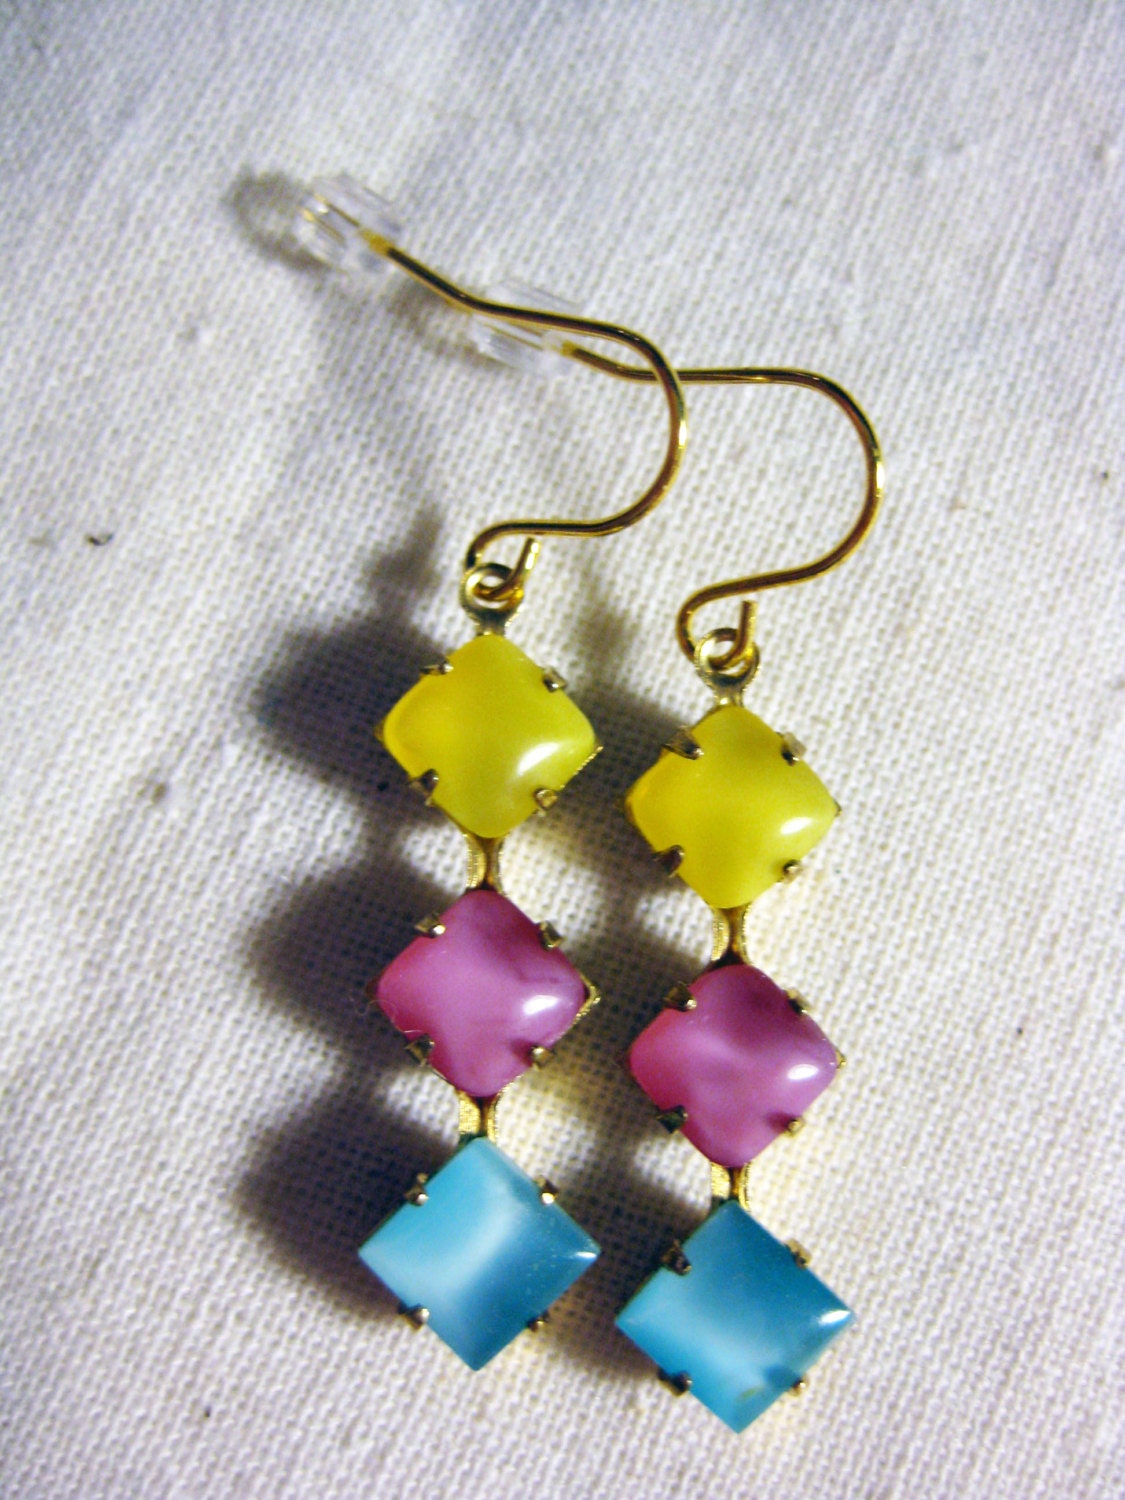 Retro Moonglow Earrings in Aqua, Pink, and Yellow, Vintage Moonglow Earrings - SoCoDivka